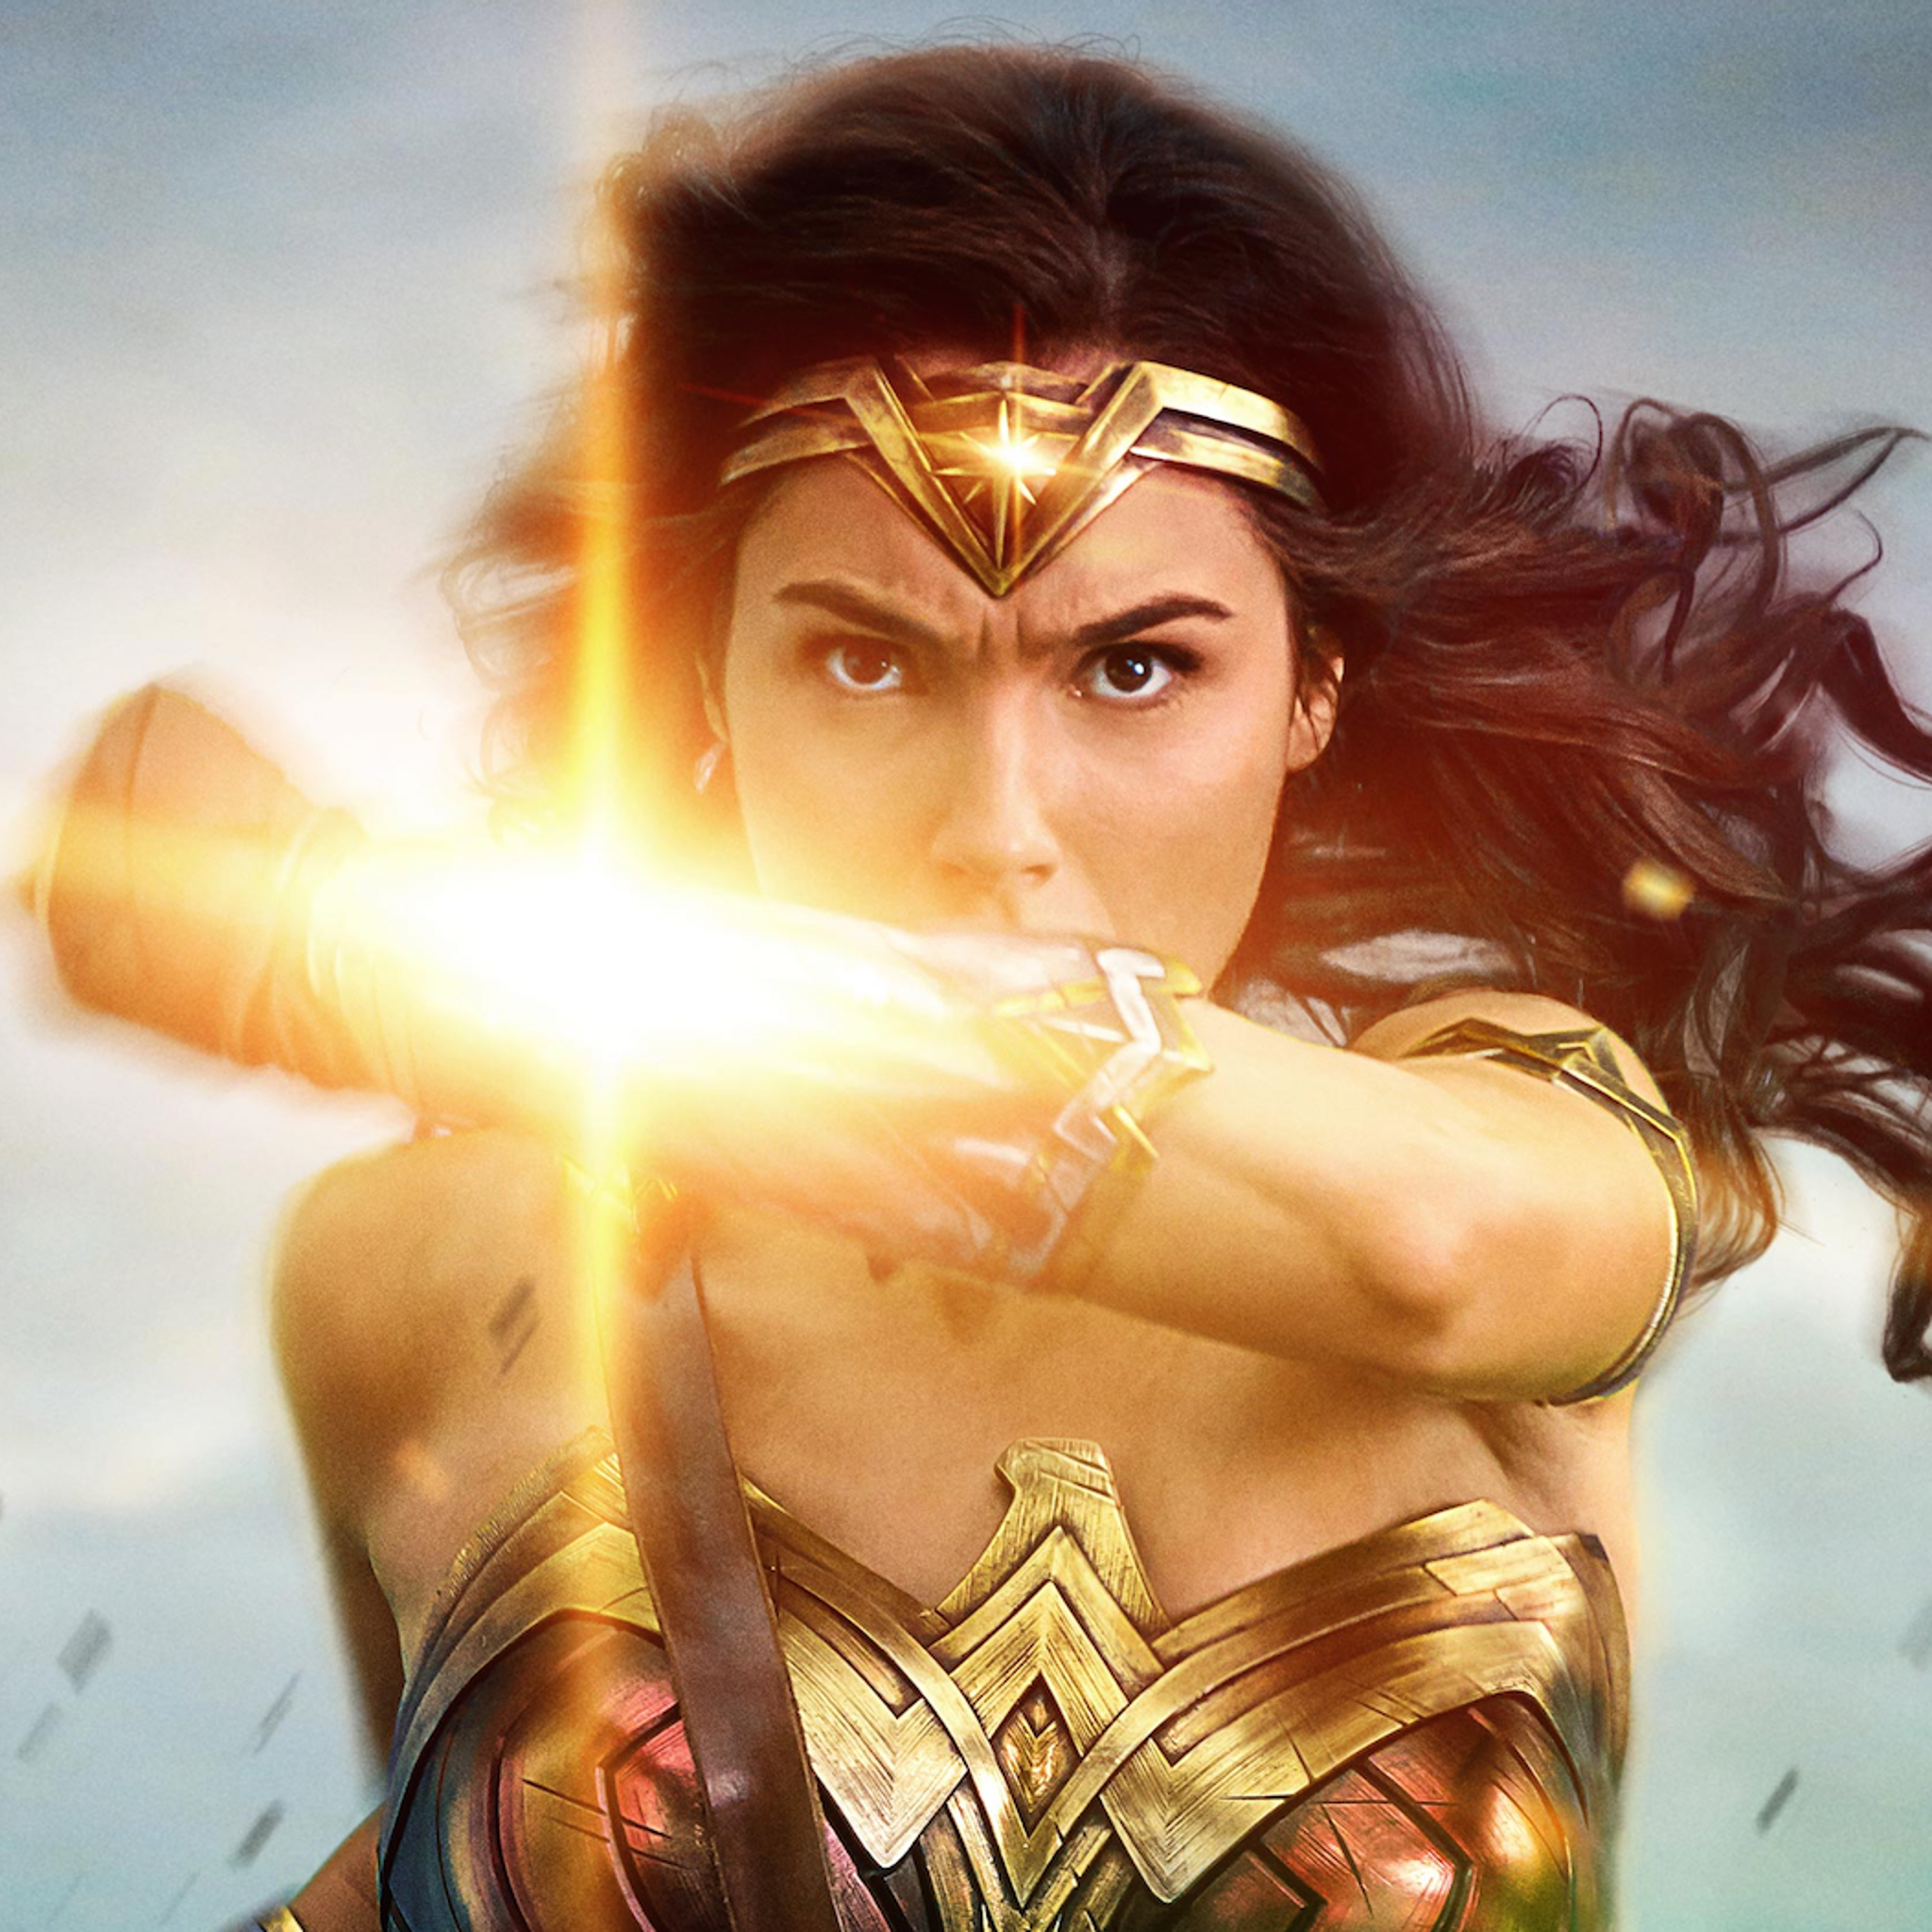 James Gunn Working on More Wonder Woman Animation